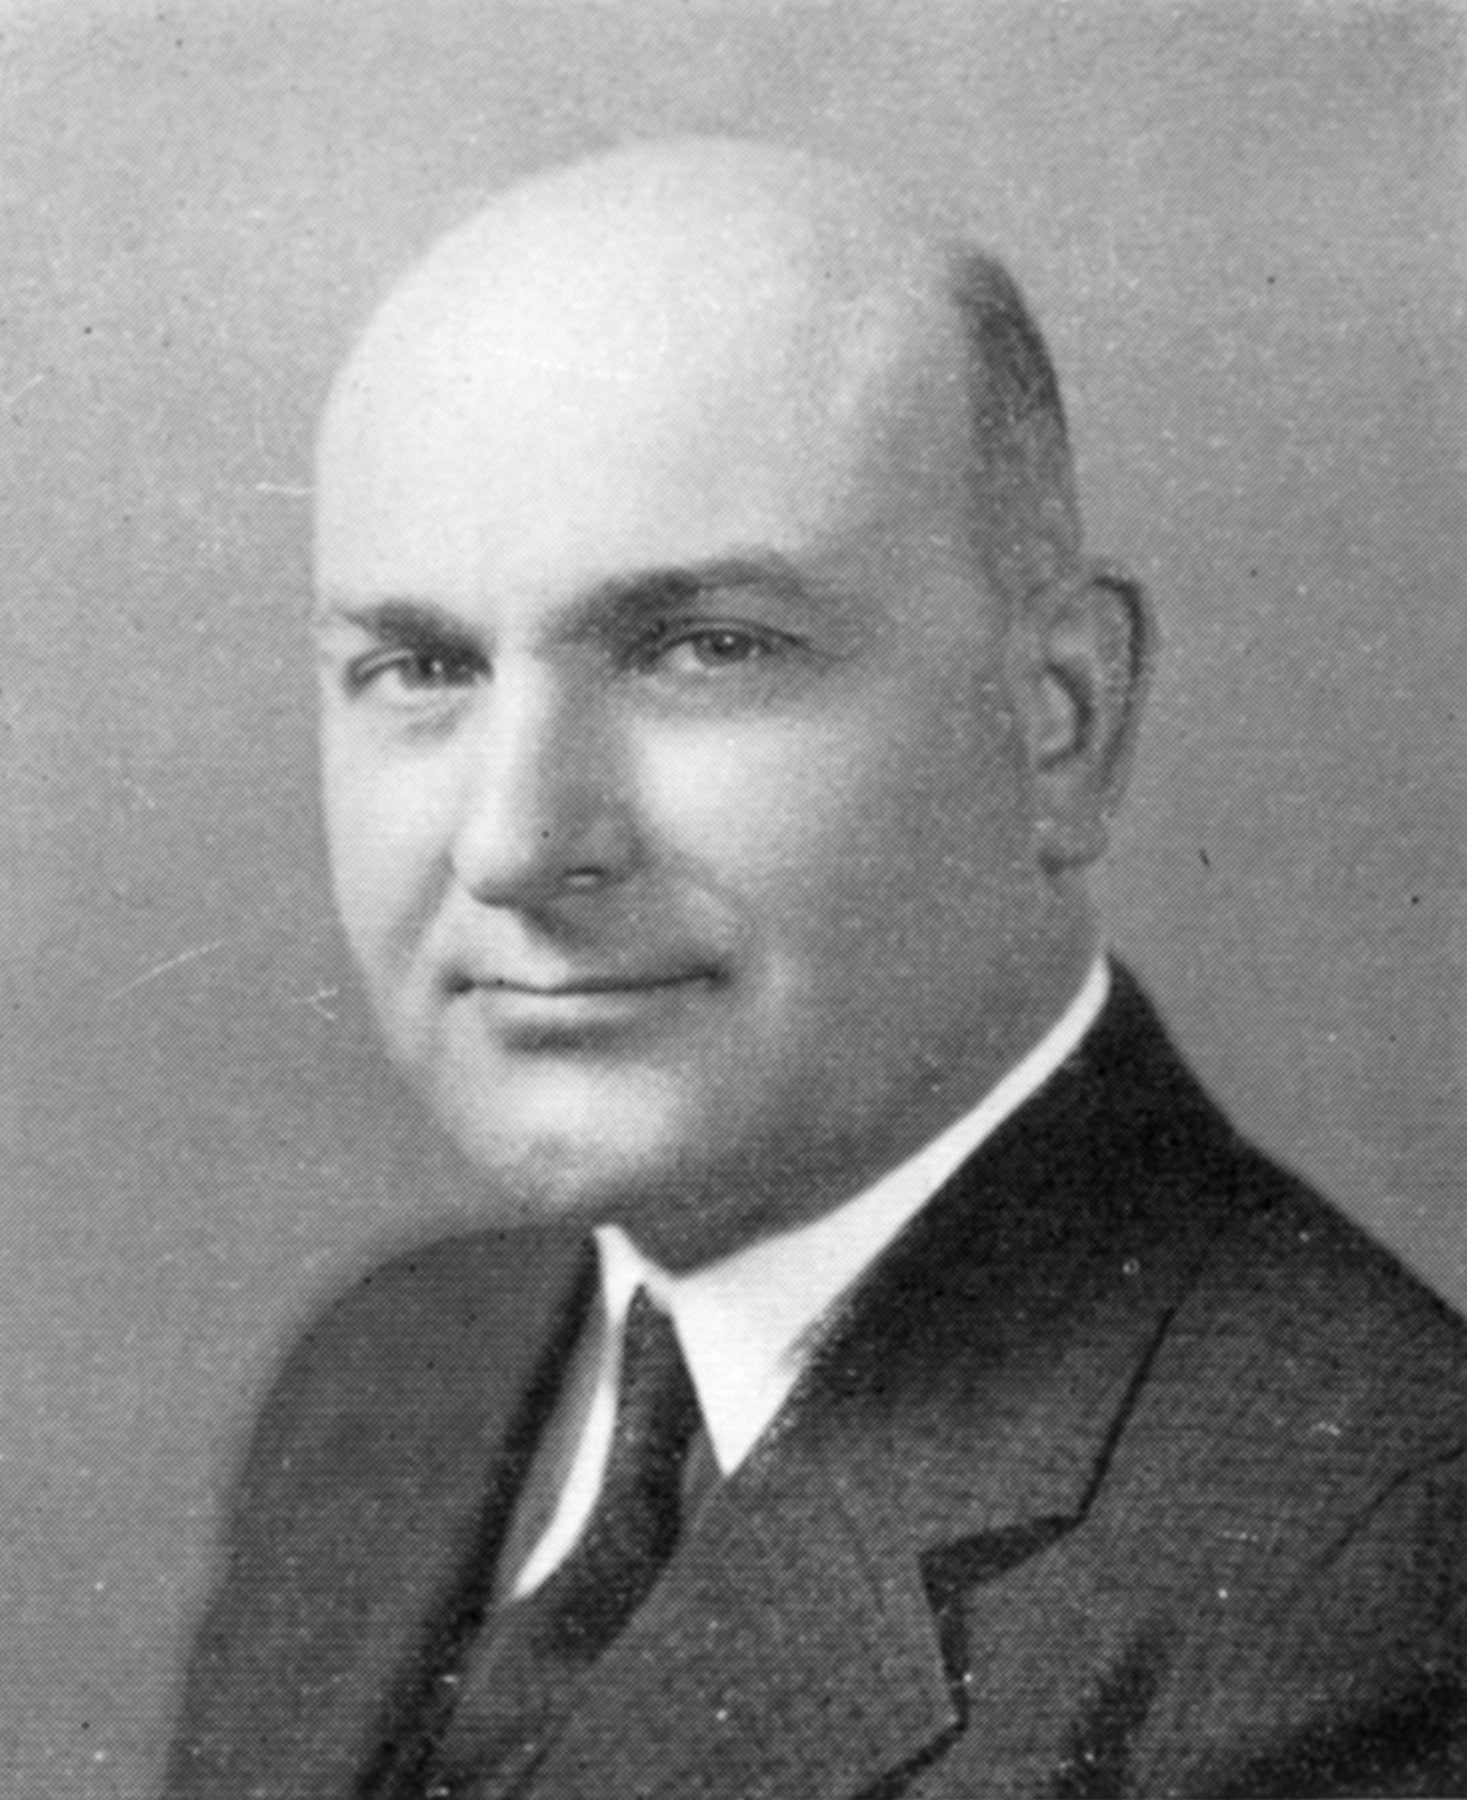 Harry M. Martin, 1942